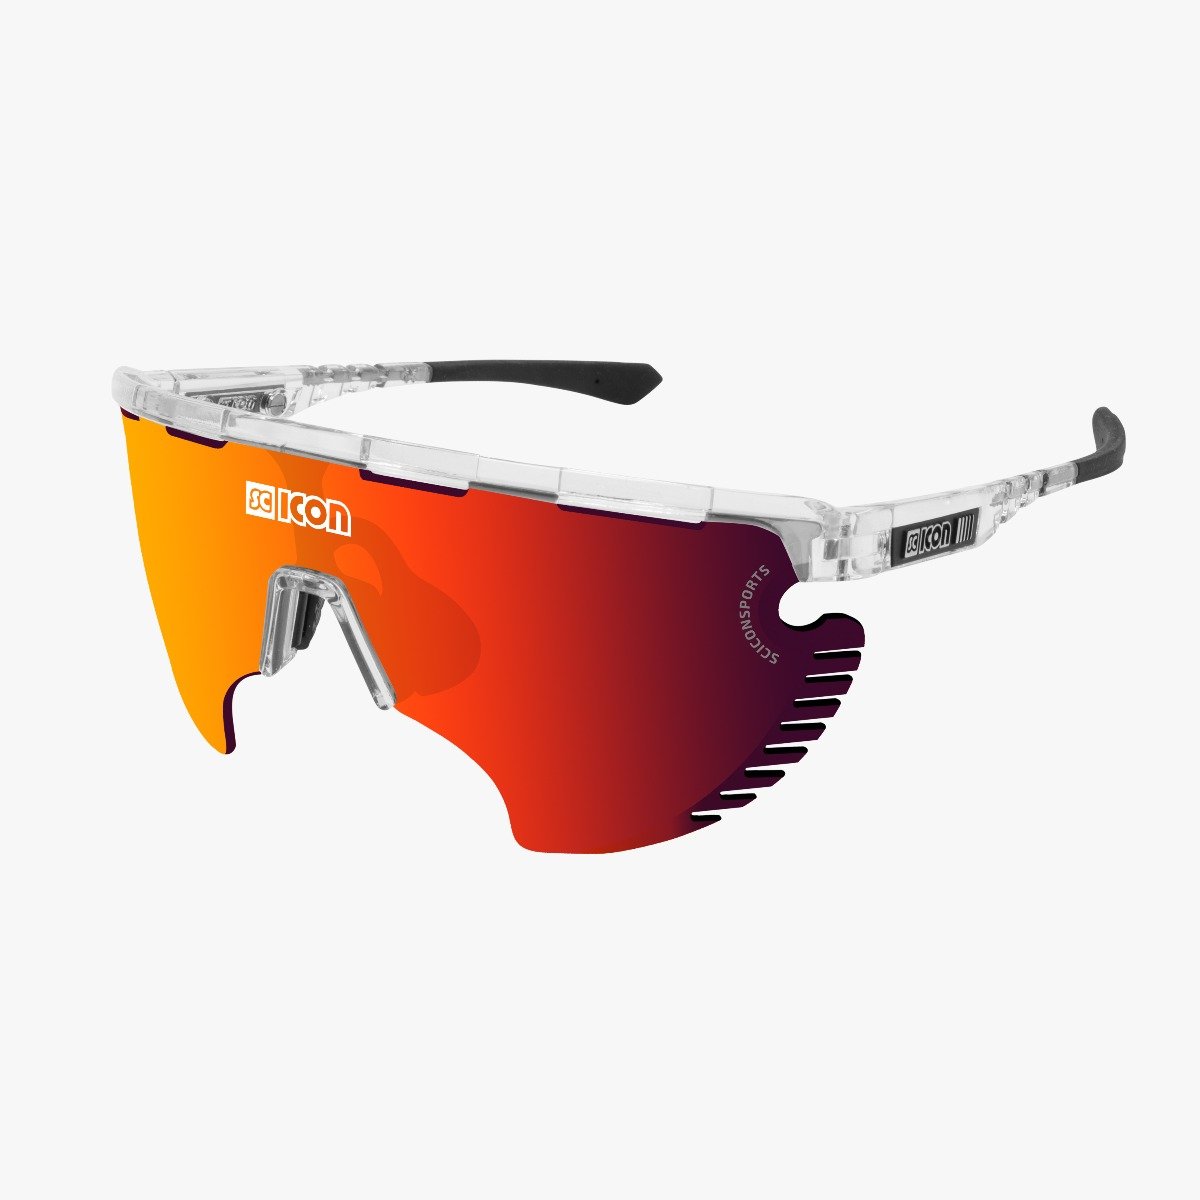 Scicon Sports | Aerowing Lamon Sport Performance Sunglasses 